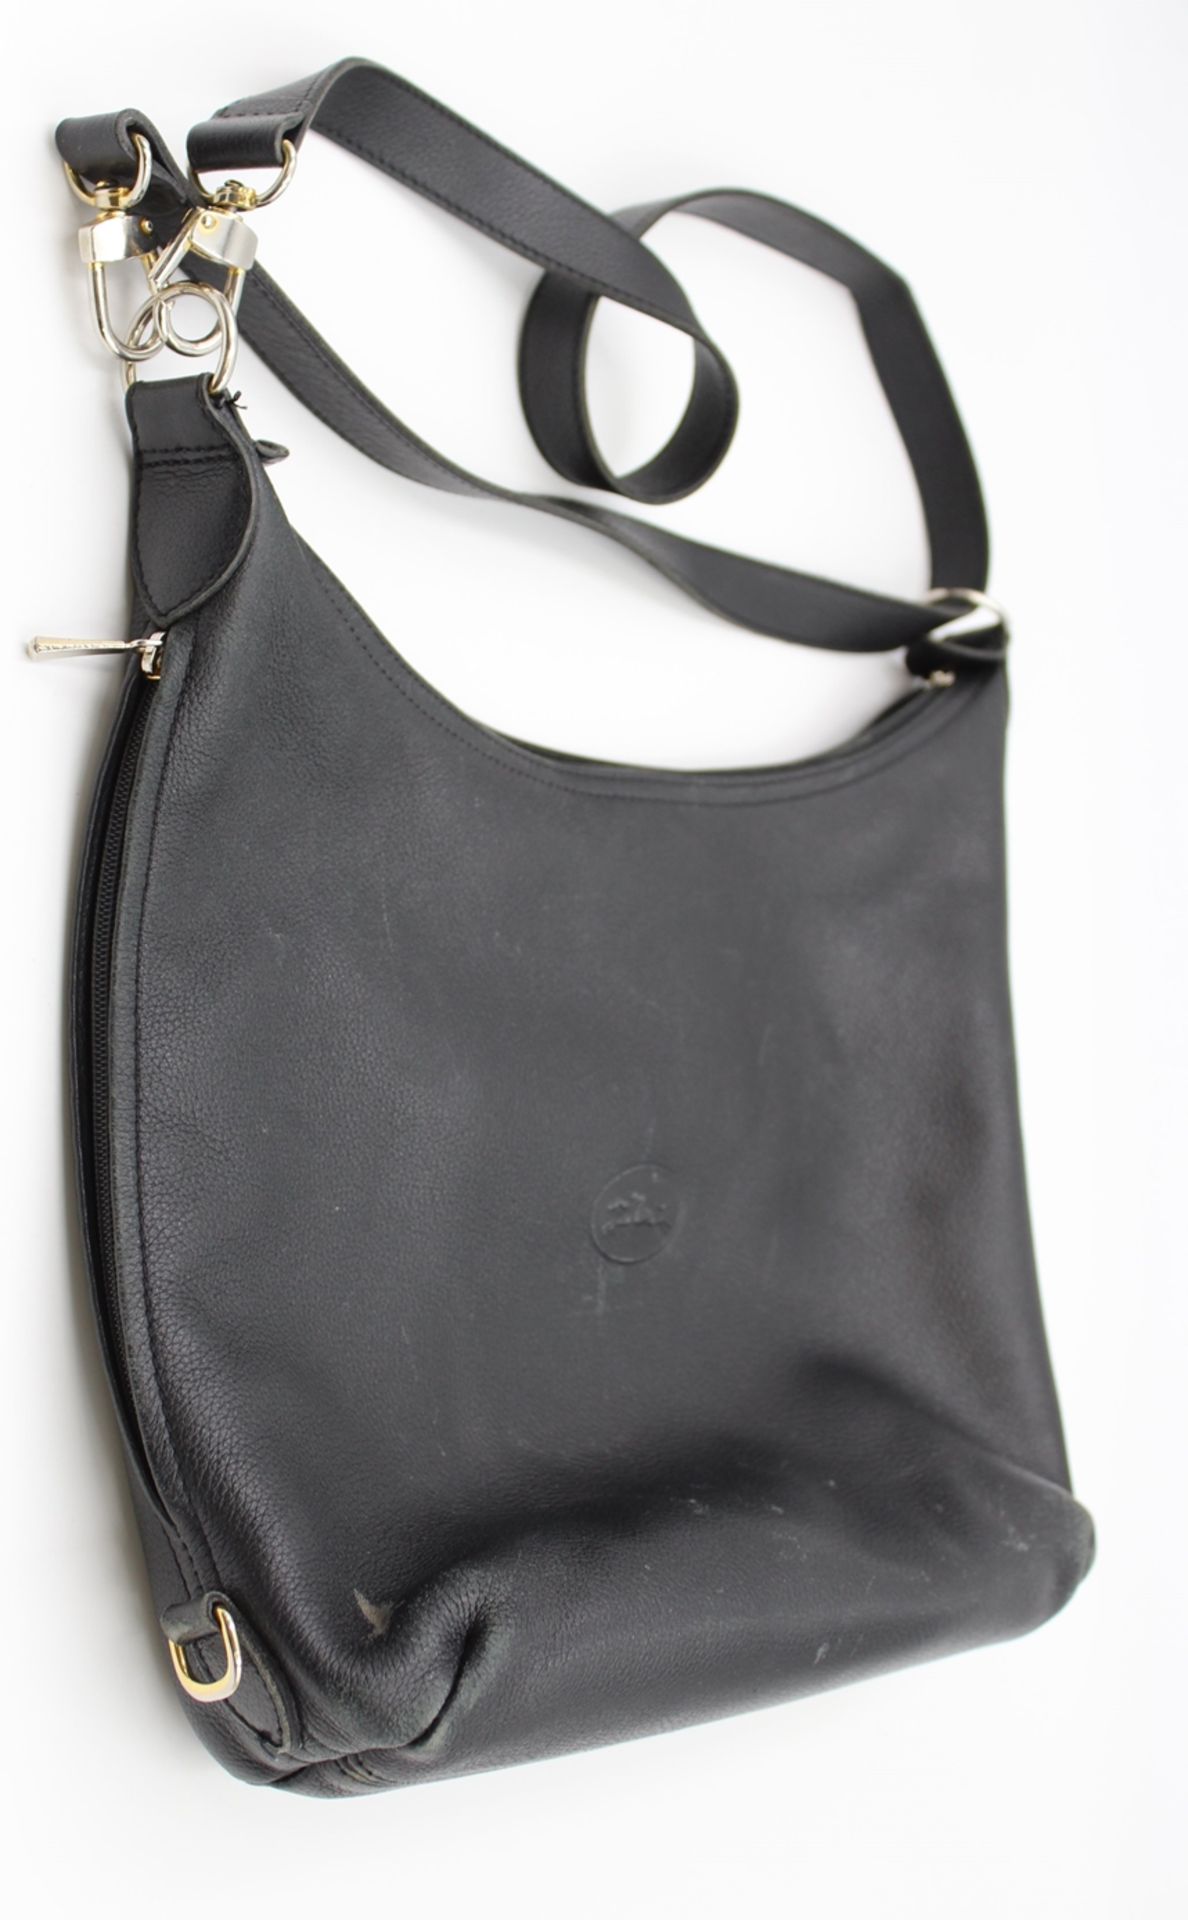 schwarze Ledertasche, Longchamp, tragespuren, ca. 30 x 32cm. - Bild 5 aus 5